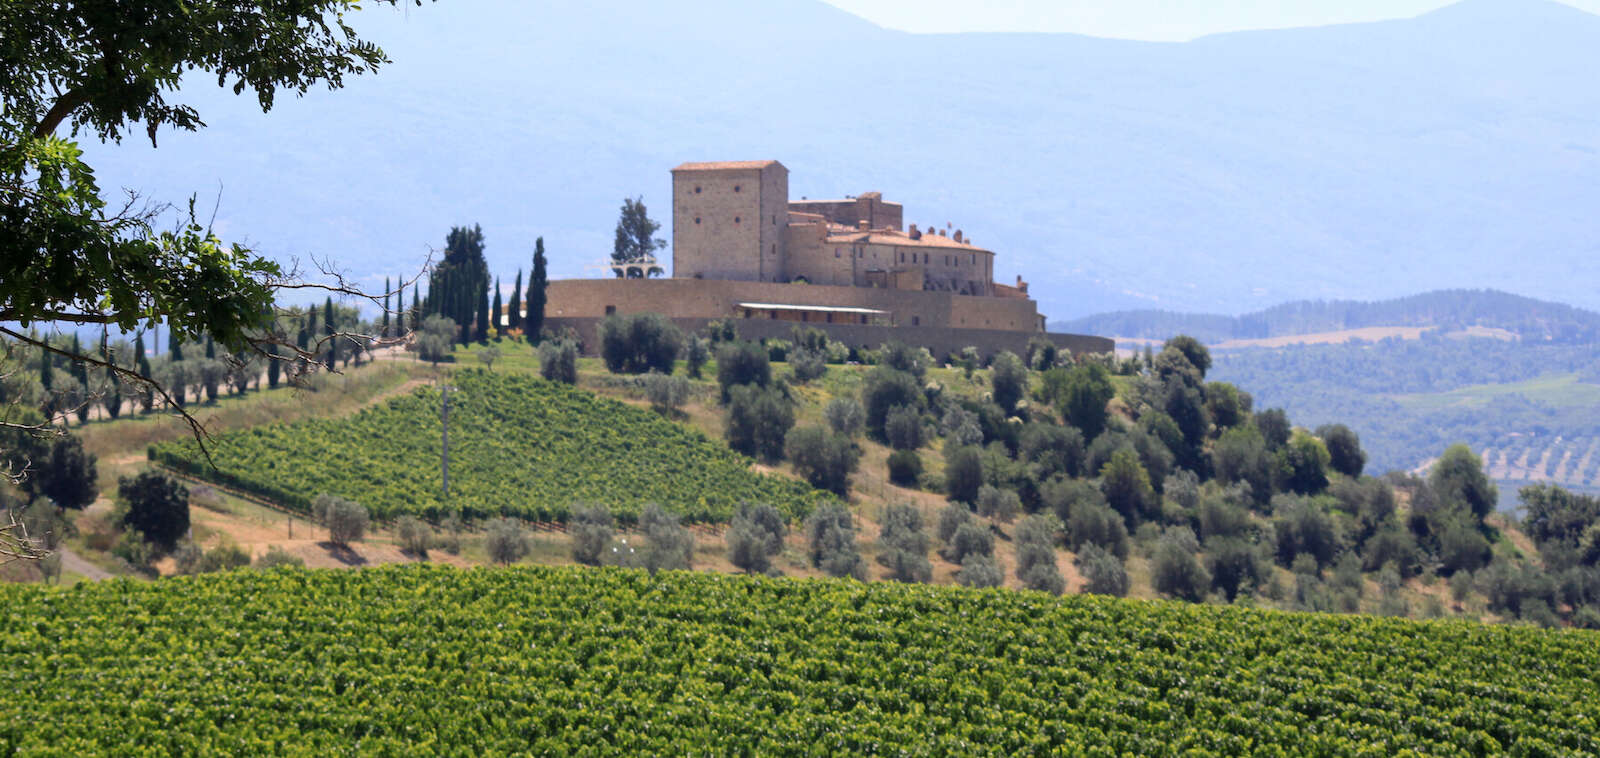 cicloposse_tuscan-wine-classic-1-1080x600-c-center.jpg